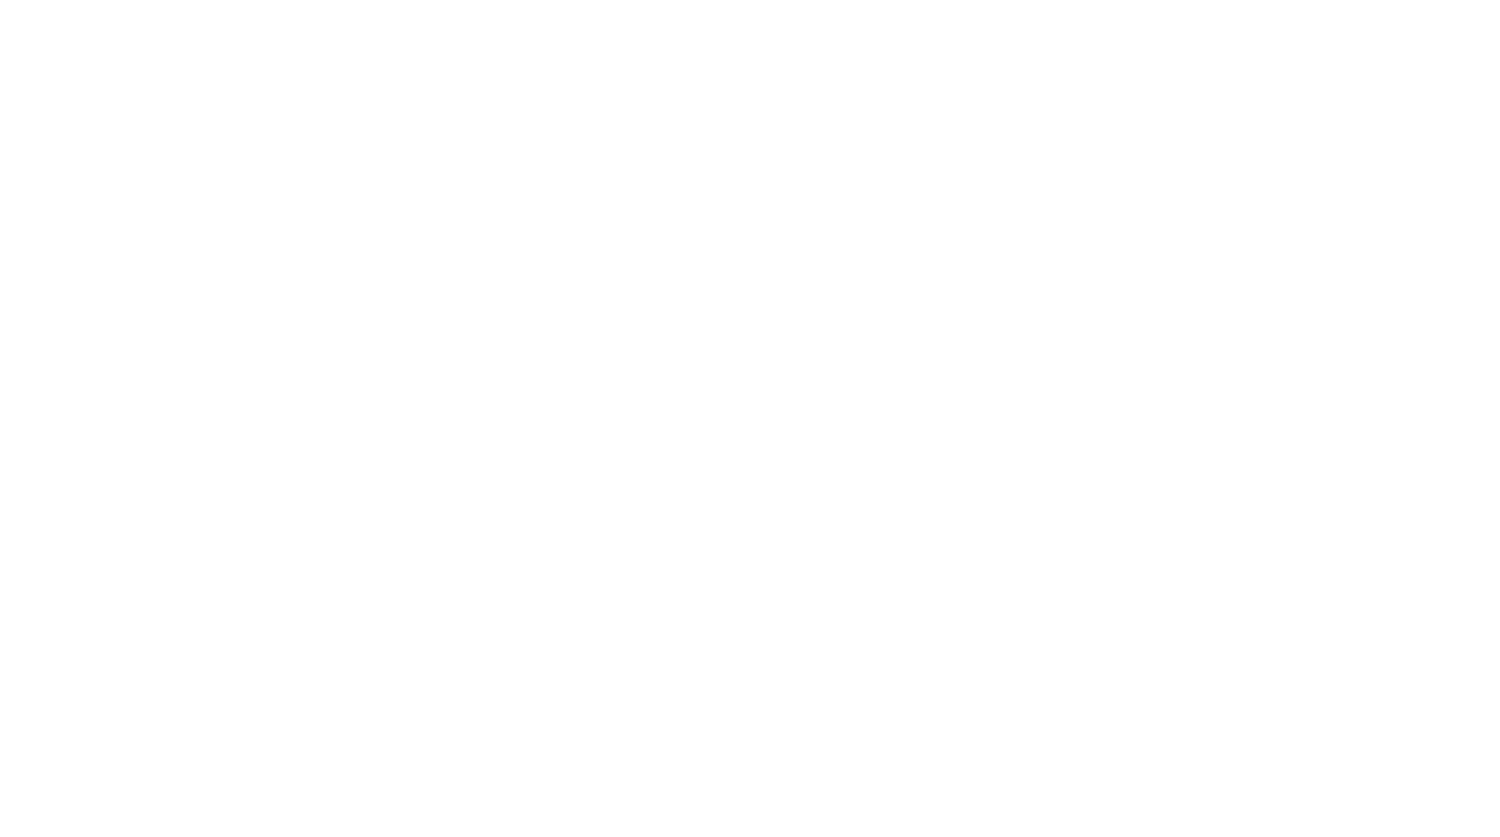 Ruben Rocha Visuals